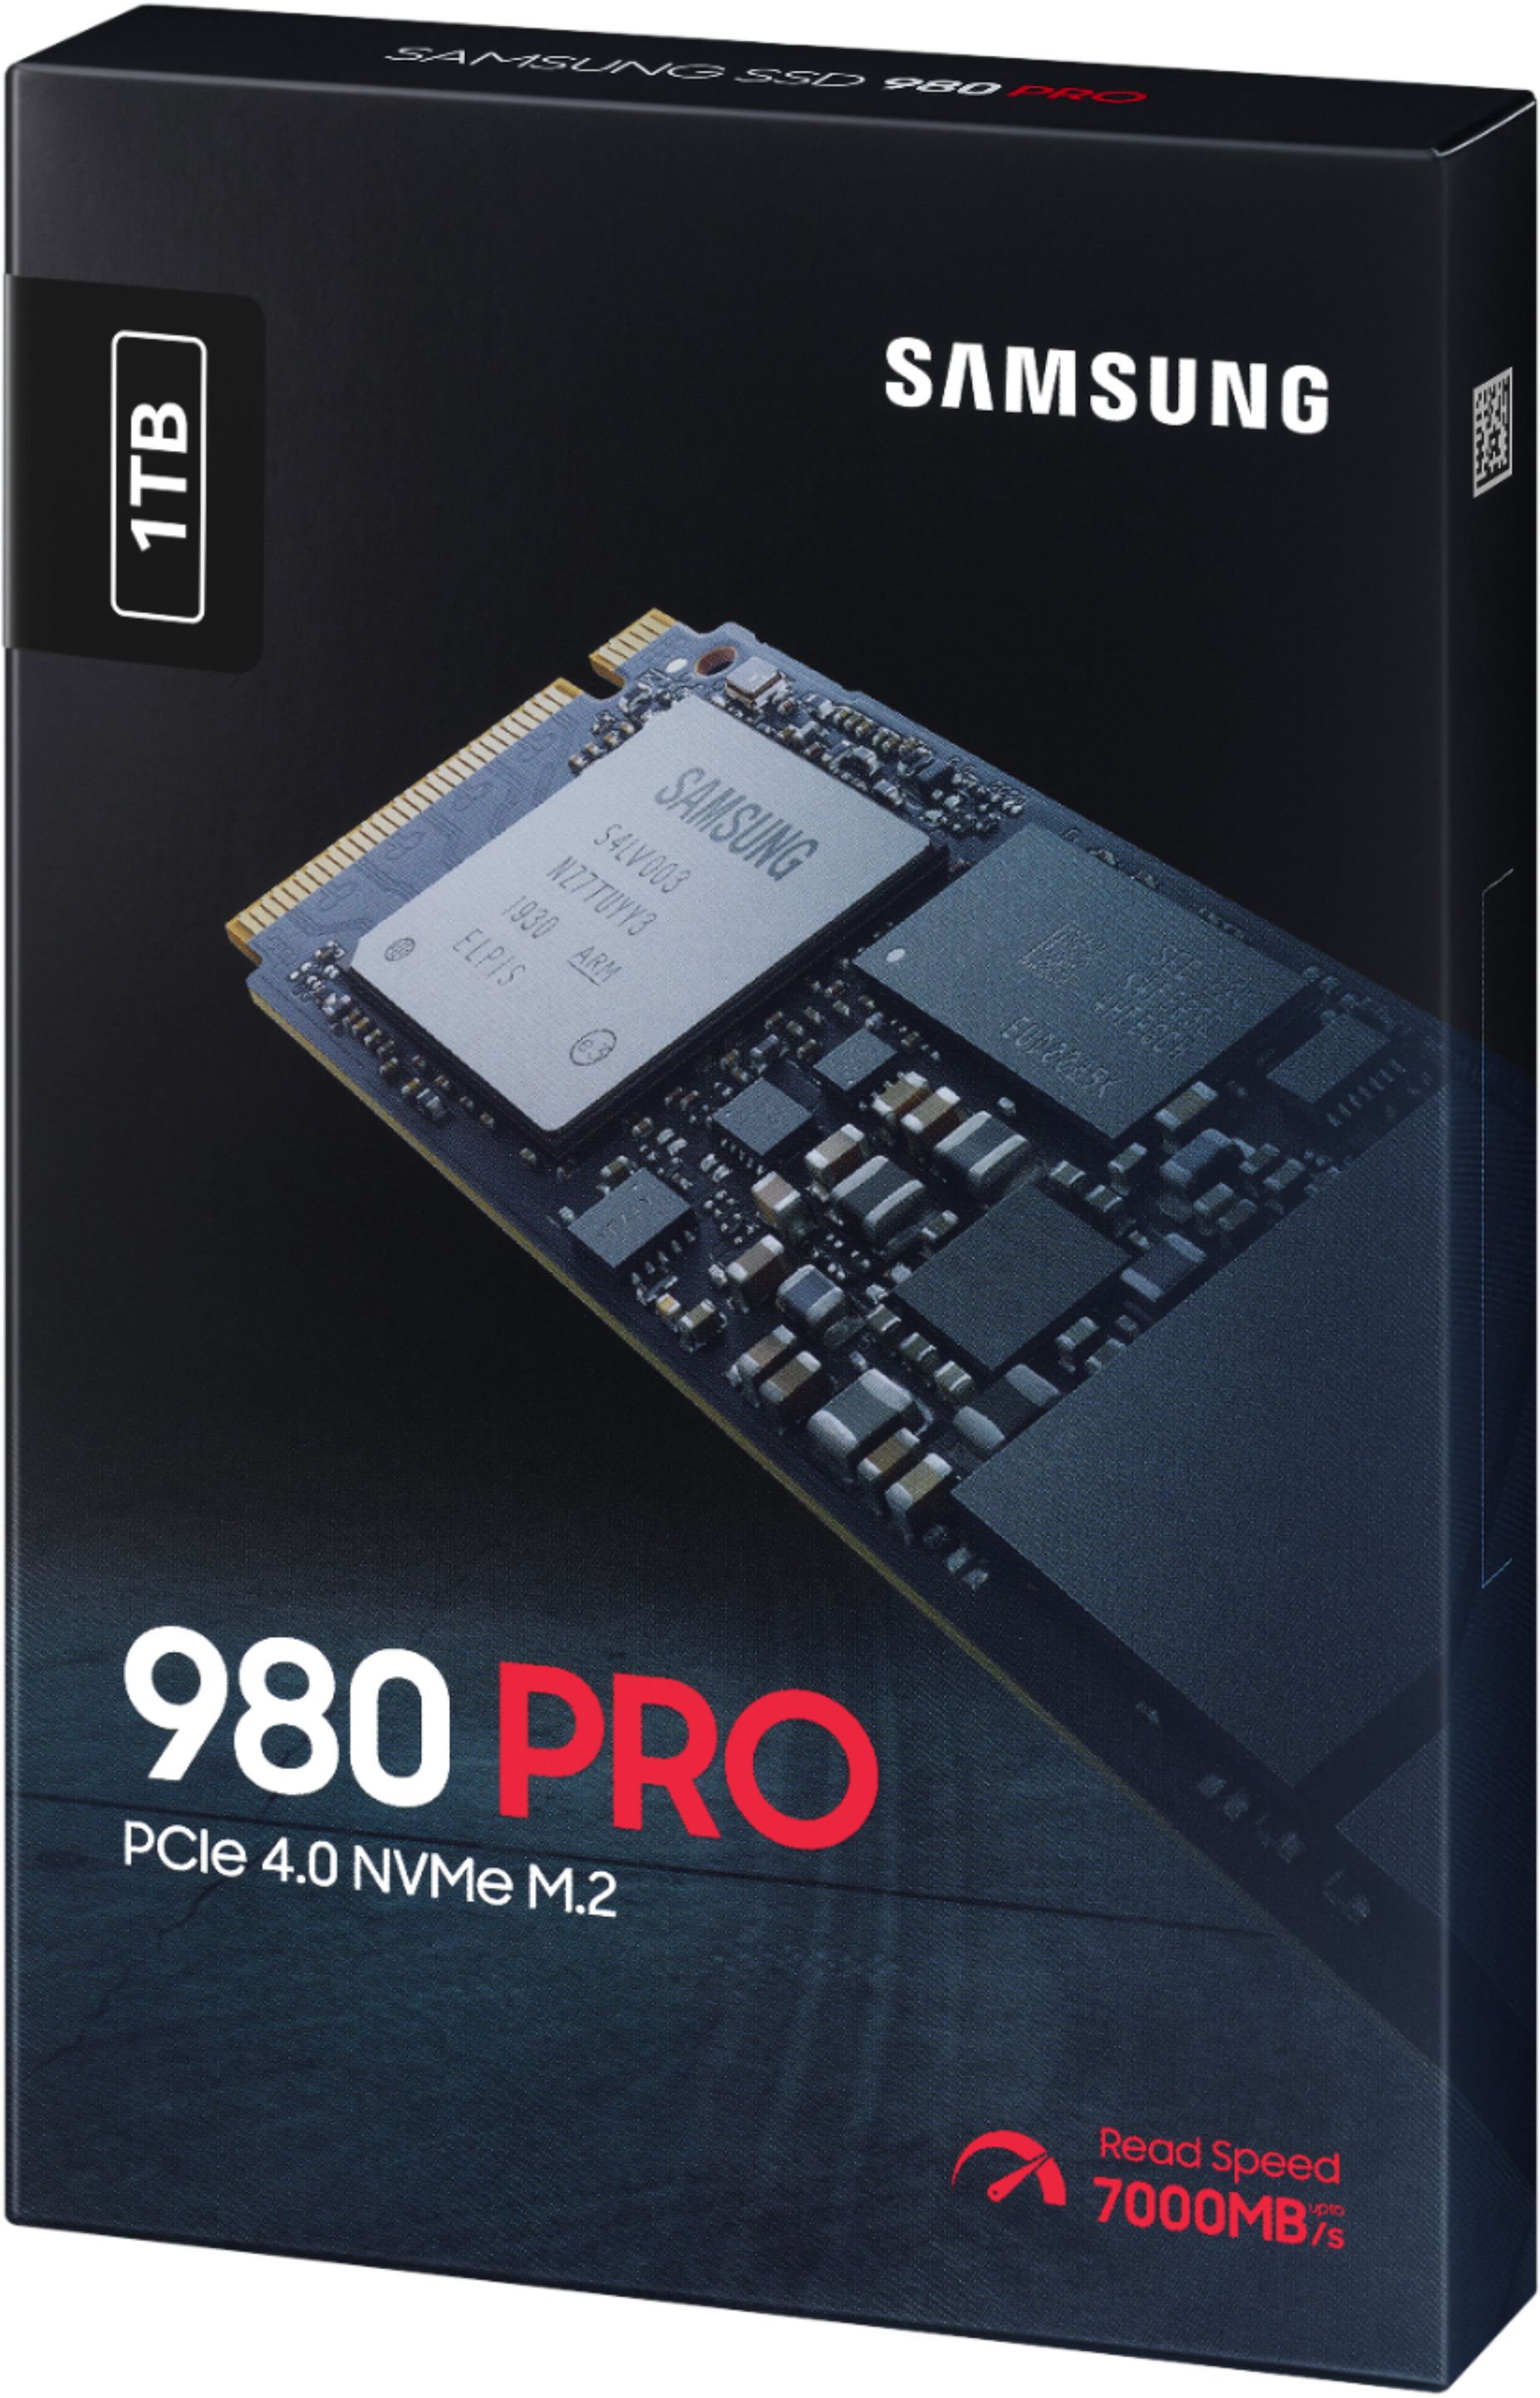 PC/タブレット PCパーツ Samsung 980 PRO 1TB Internal Gaming SSD PCIe Gen 4 x4 NVMe MZ 